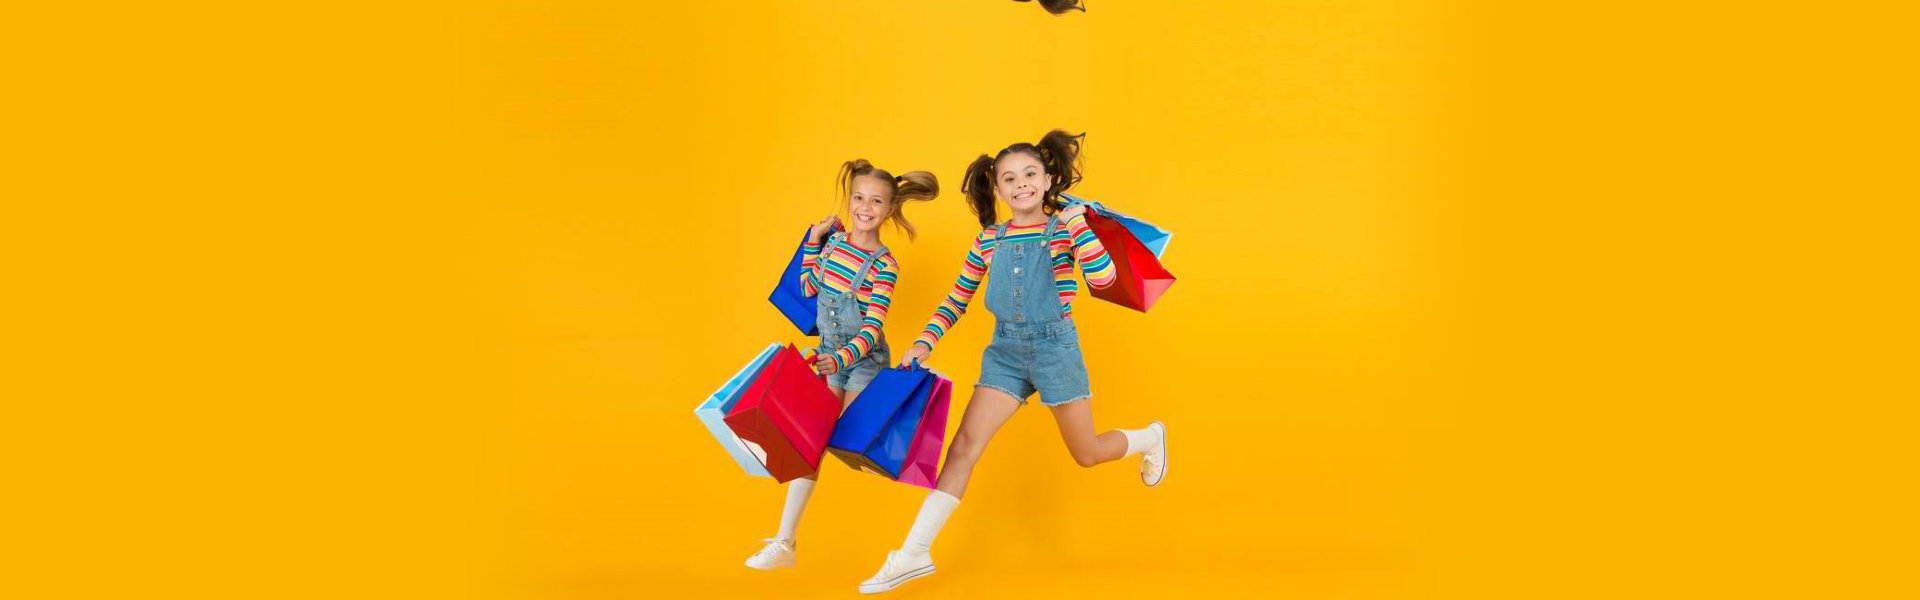 happy kids shopping